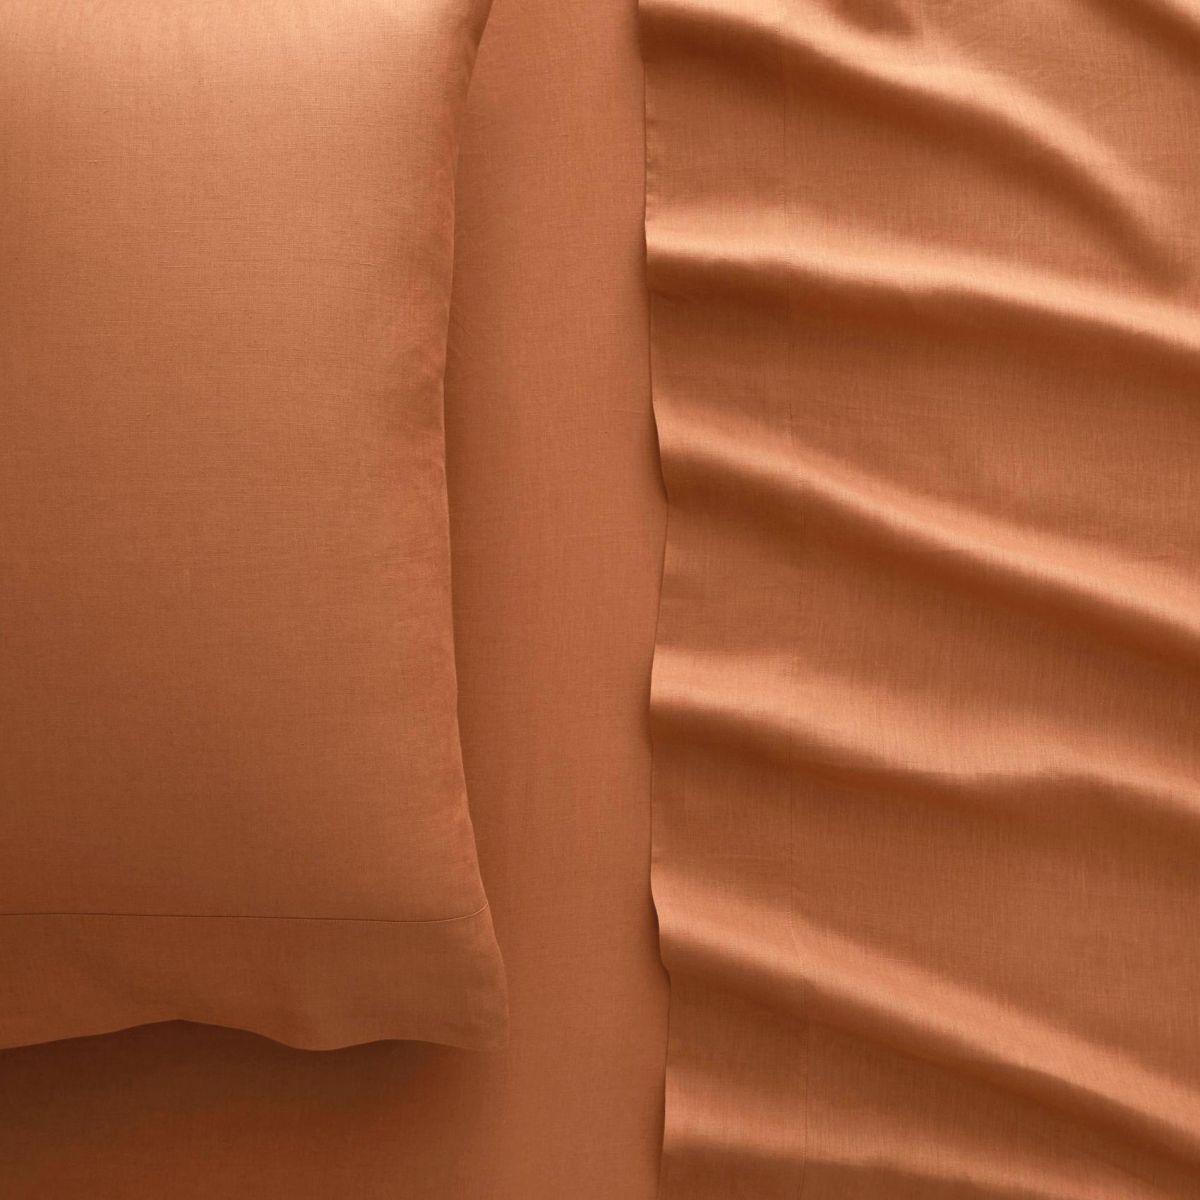 Abbotson Maple Linen Standard Pillowcase by Sheridan